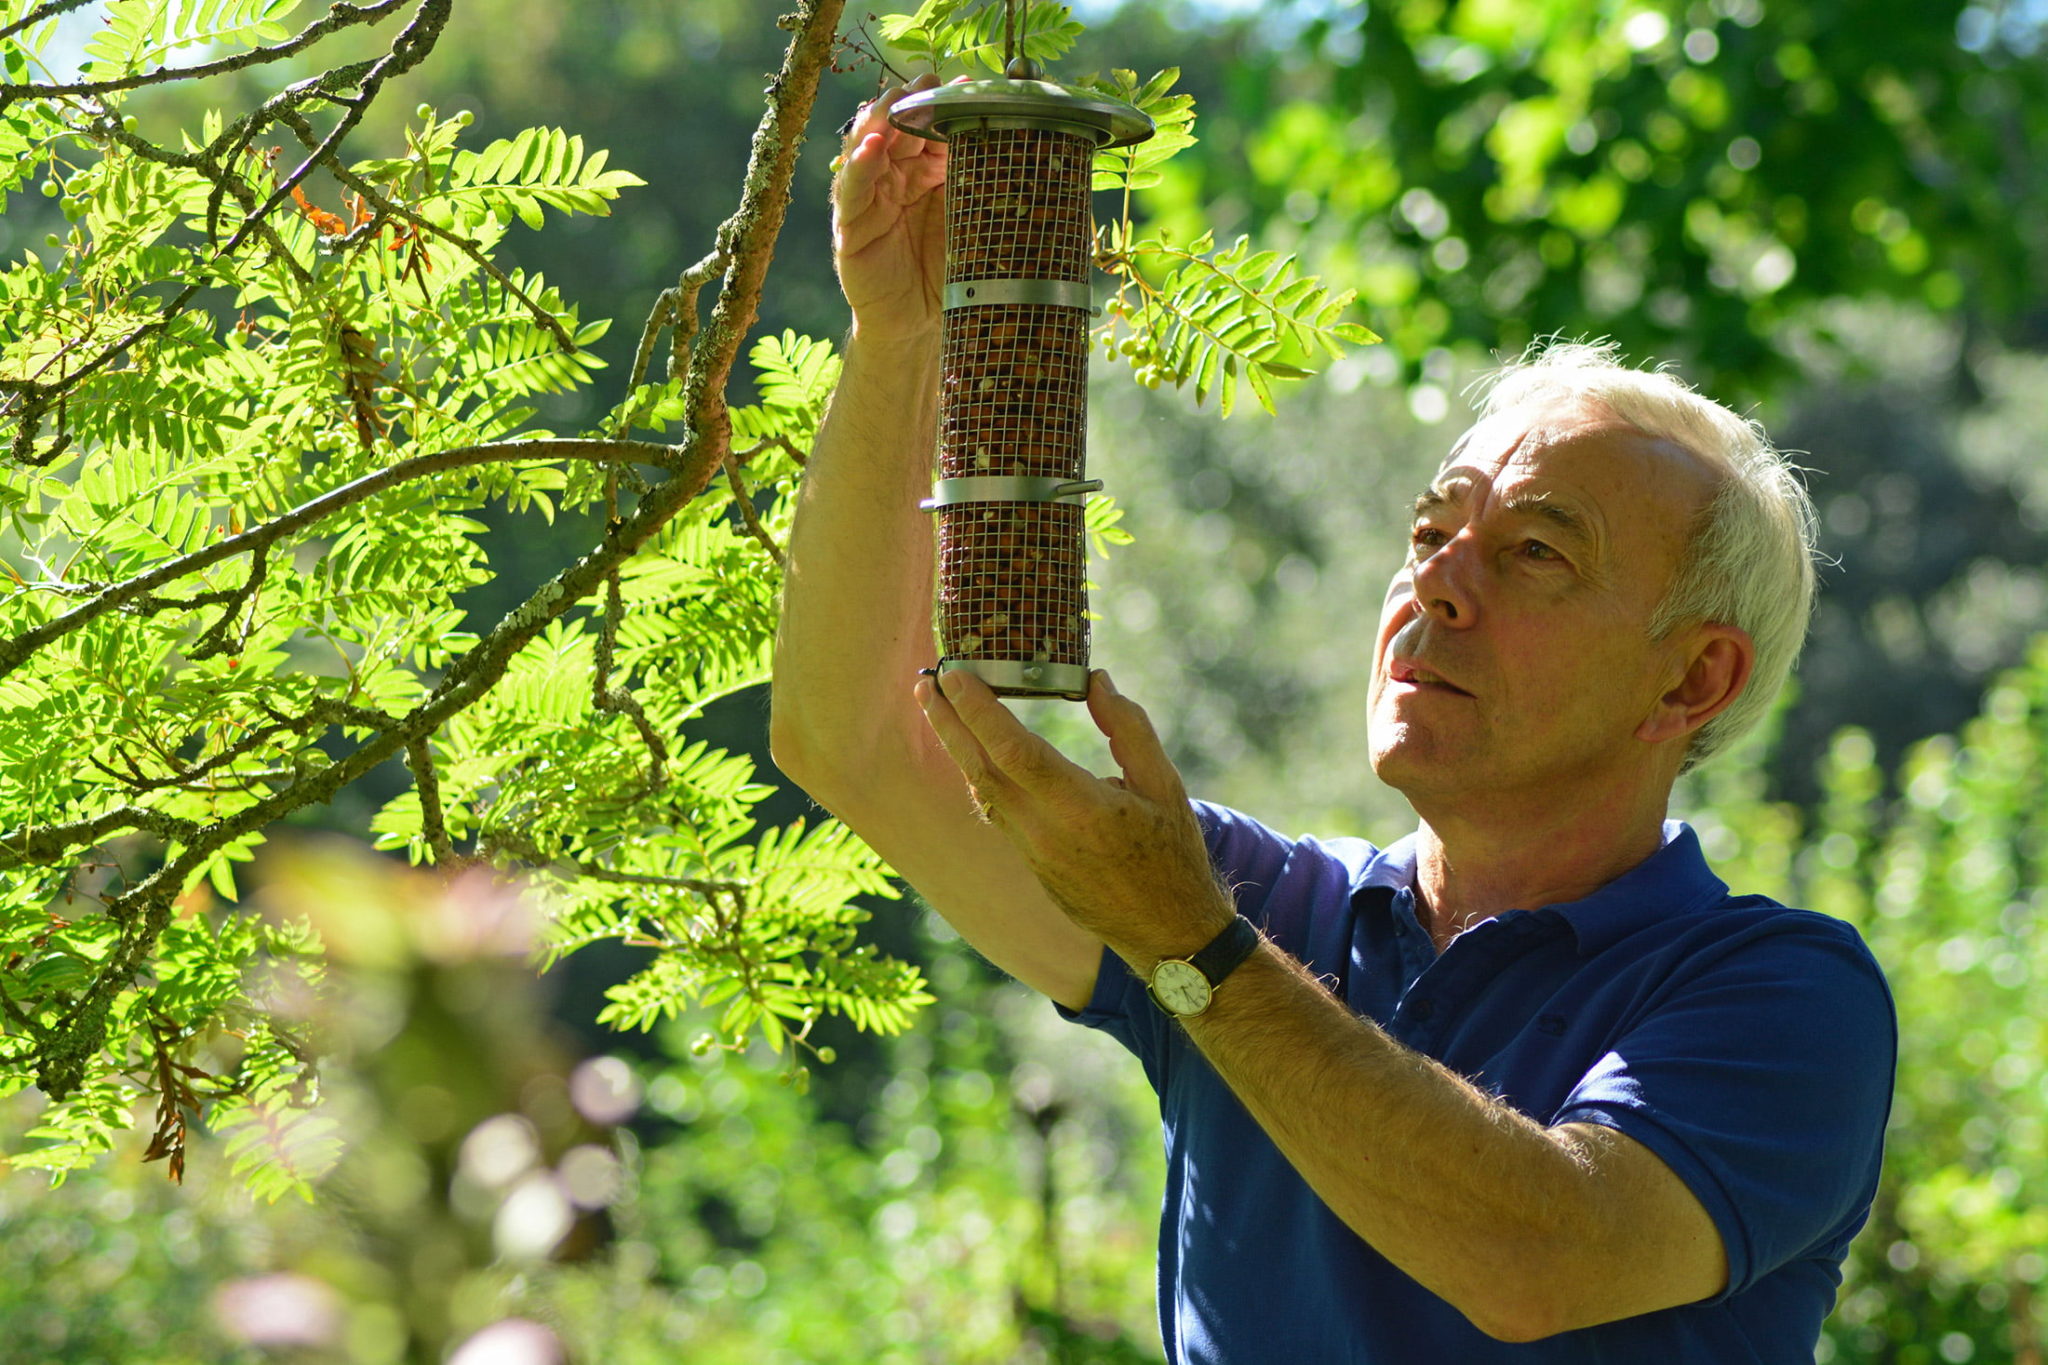 Richard Jackson feeding the birds in his garden with bird food